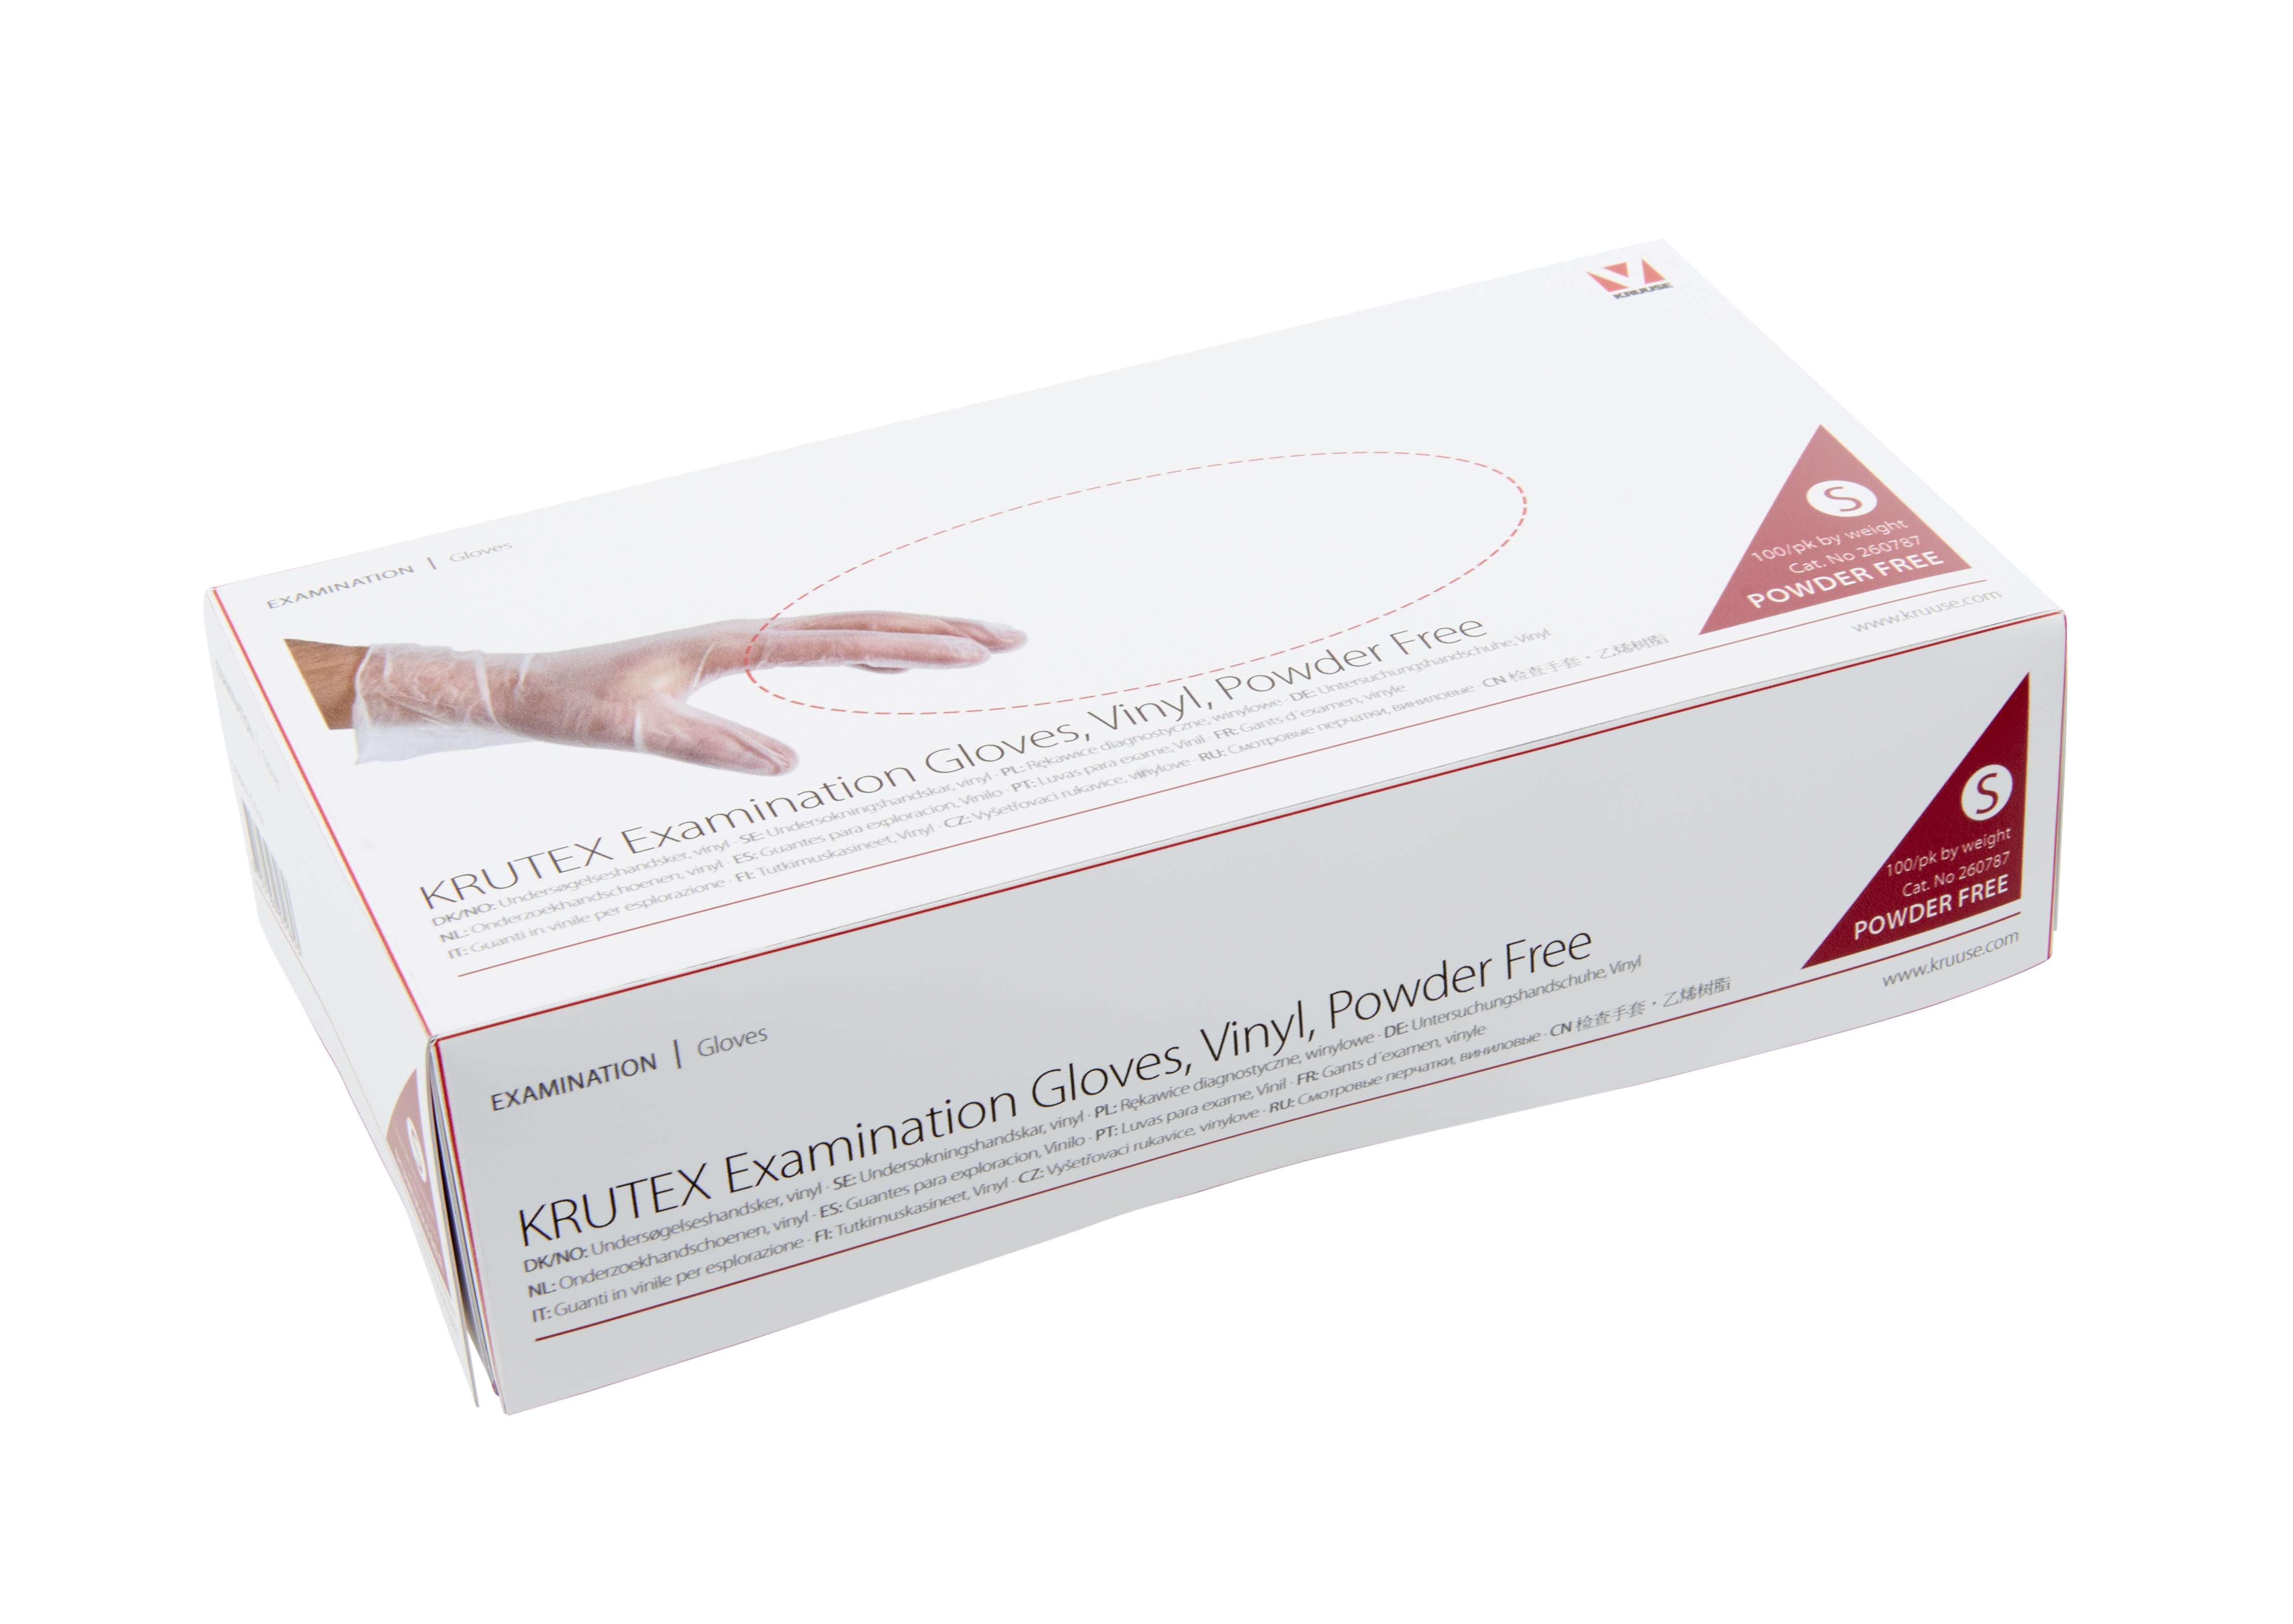 KRUTEX Examination Gloves, vinyl, powder-free, XL, 100/pk